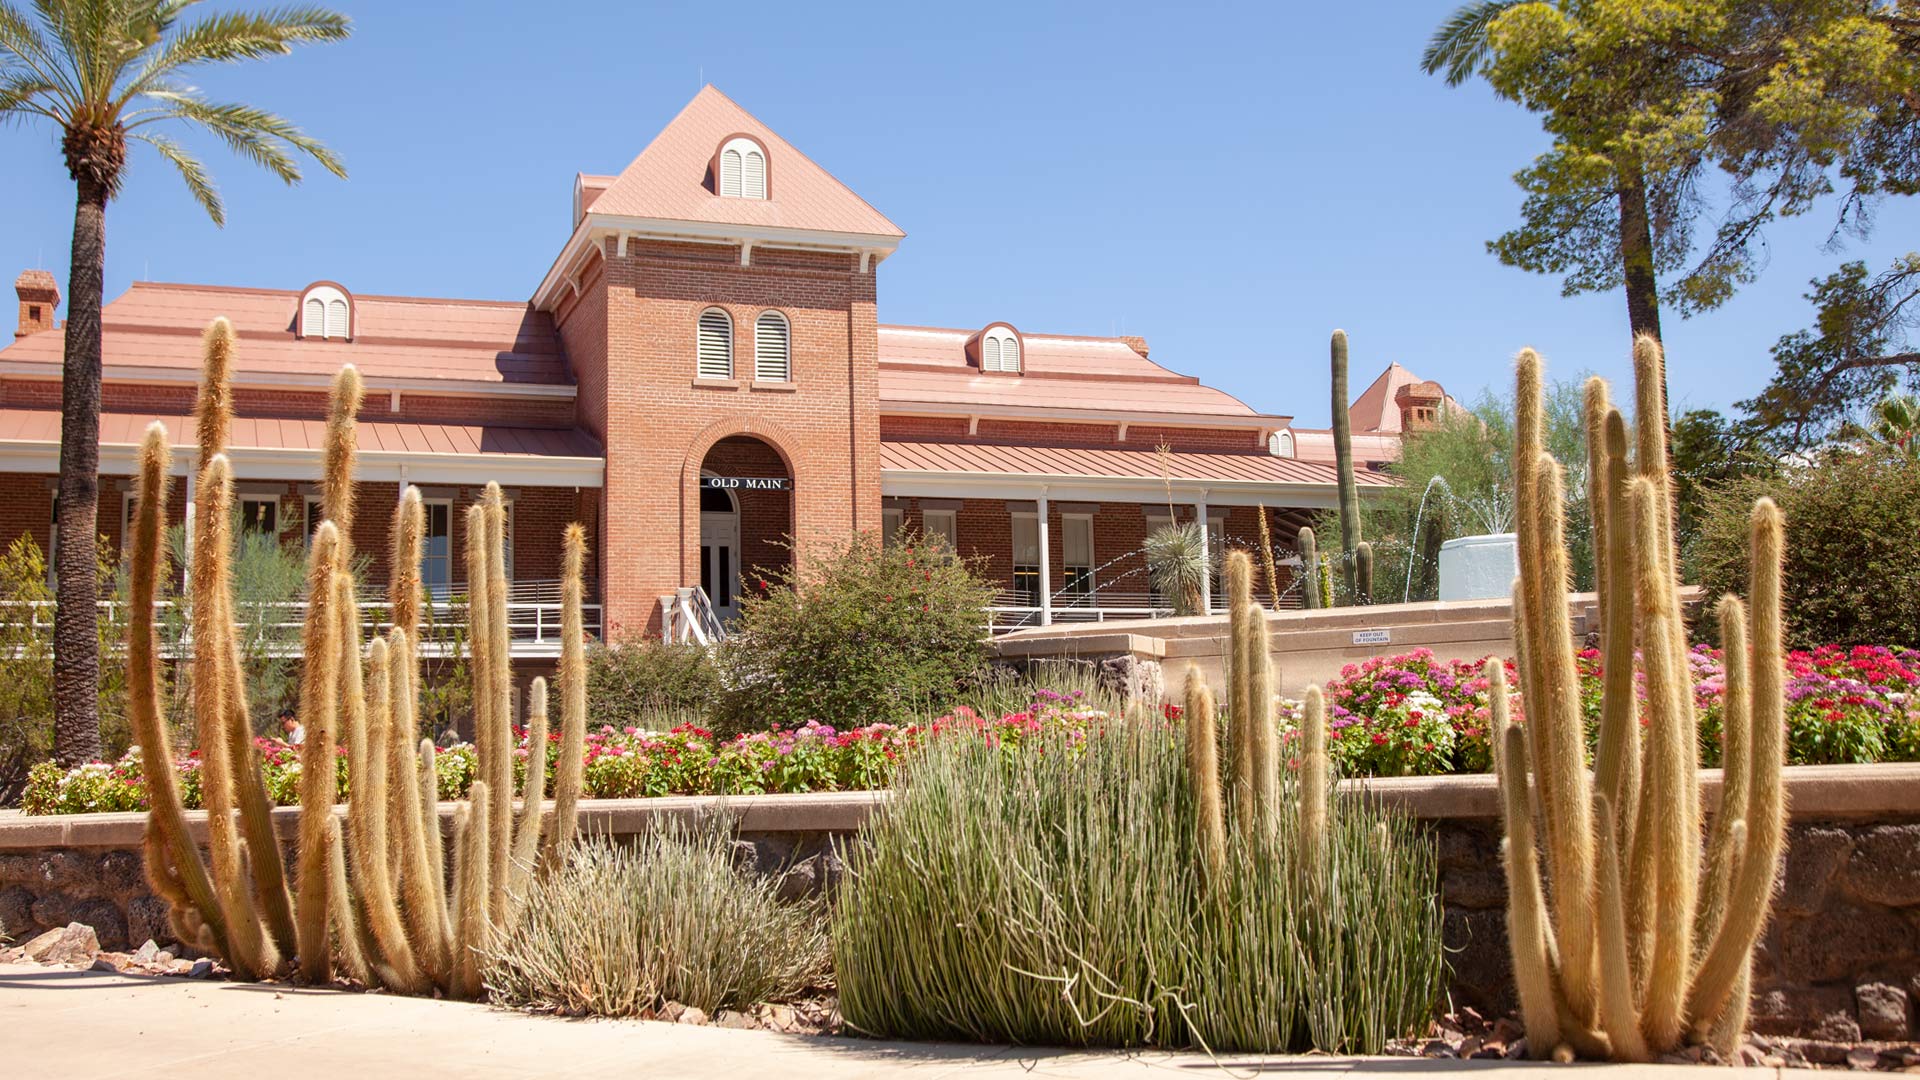 Old Main on the University of Arizona campus.